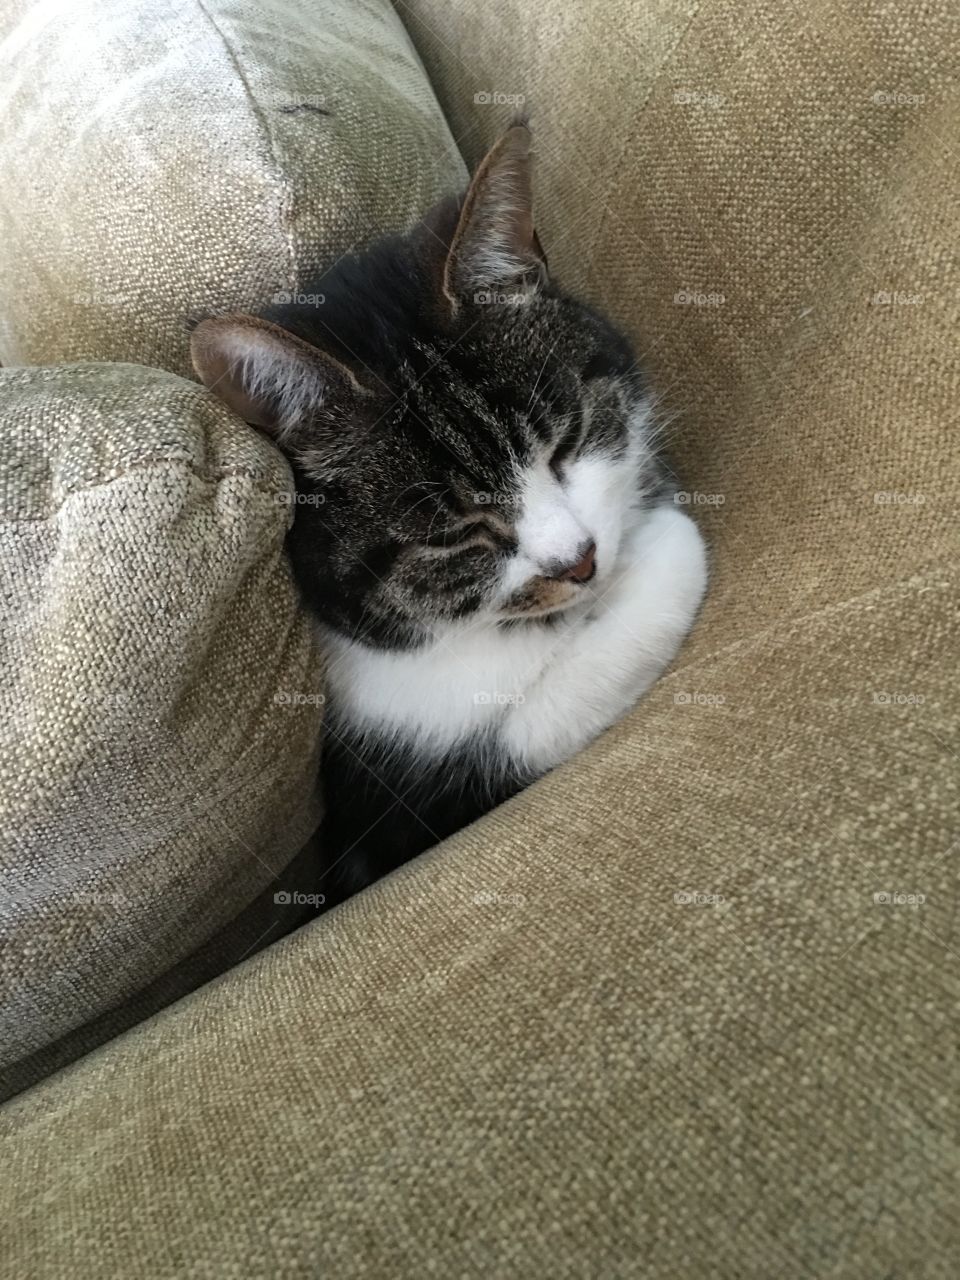 Cat hiding herself down behind cushions 